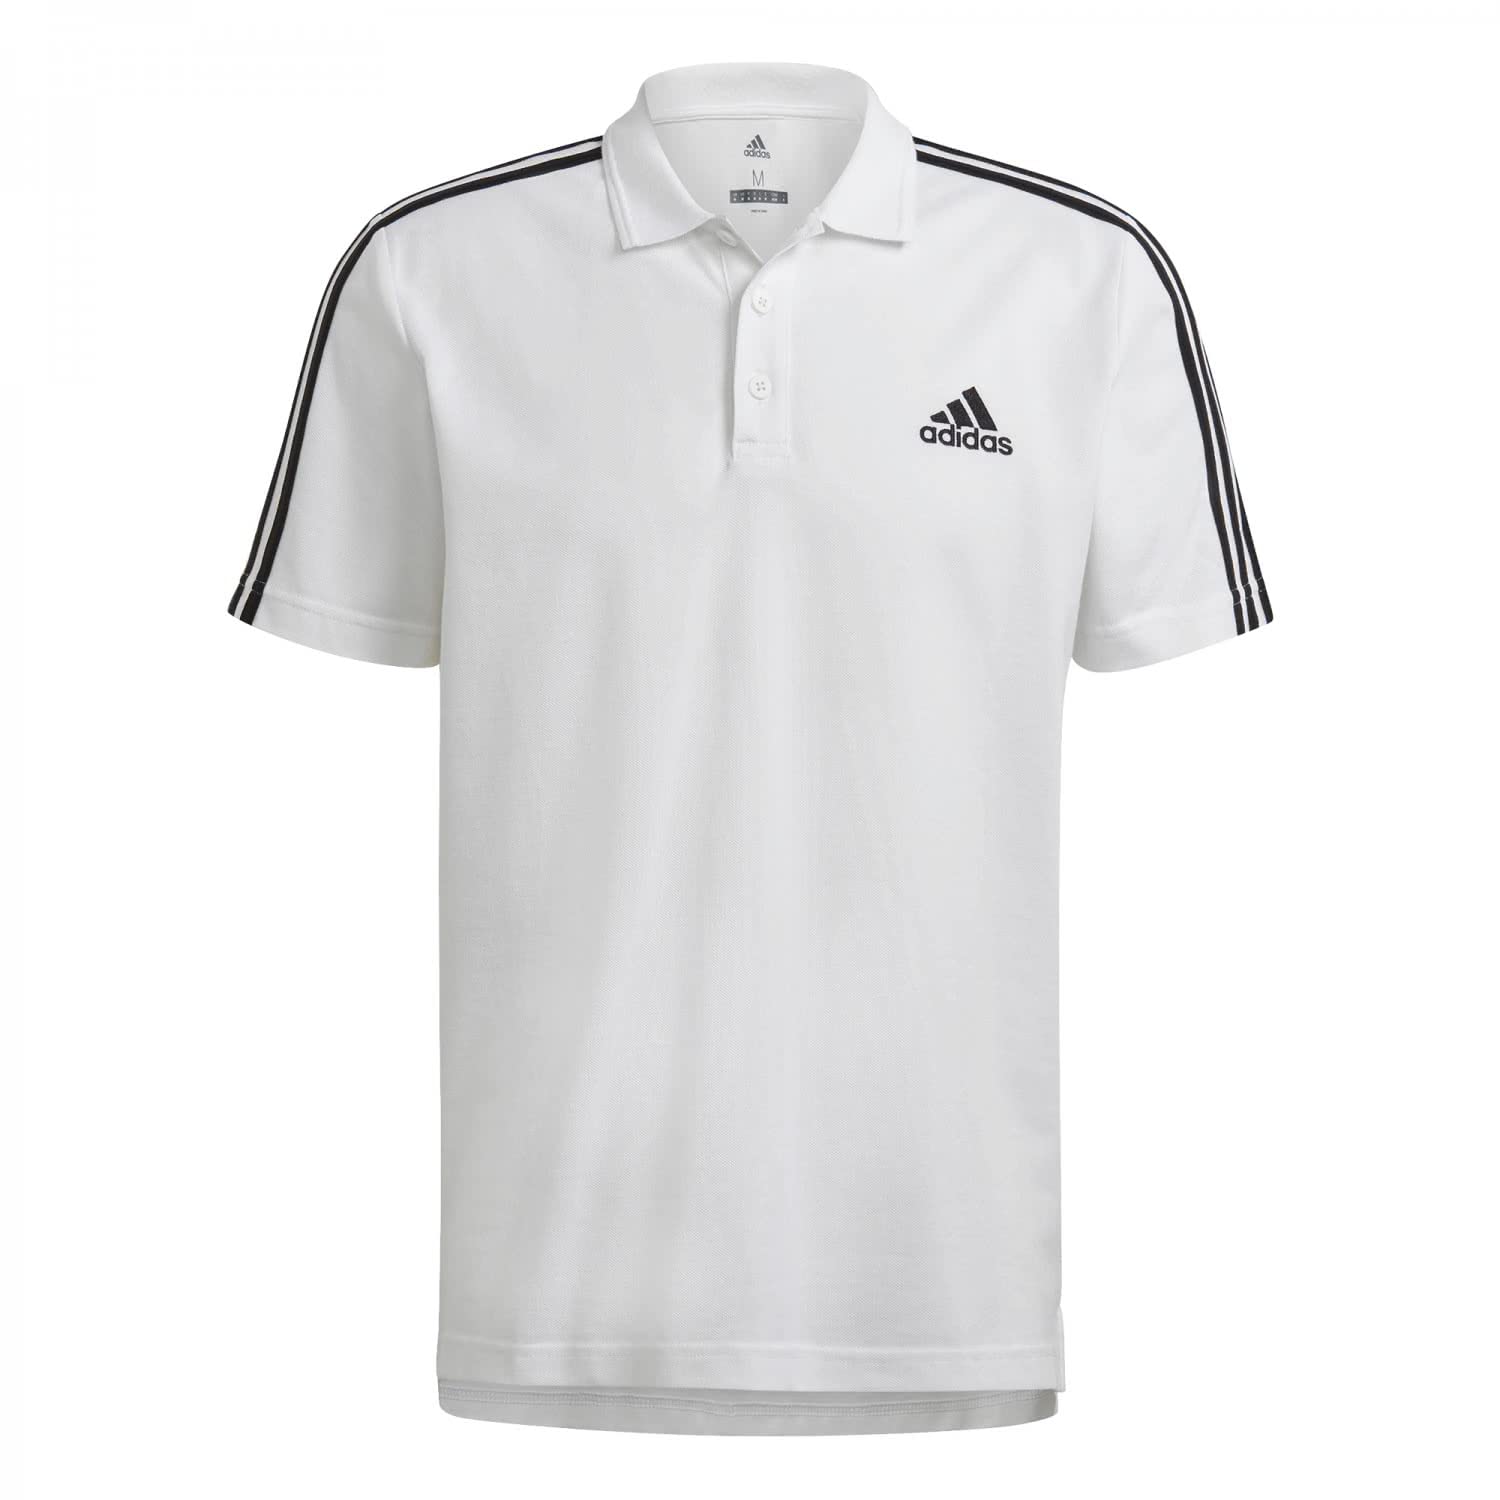 adidas Herren M 3s Pq Polo Shirt, Weiß / Schwarz, S EU